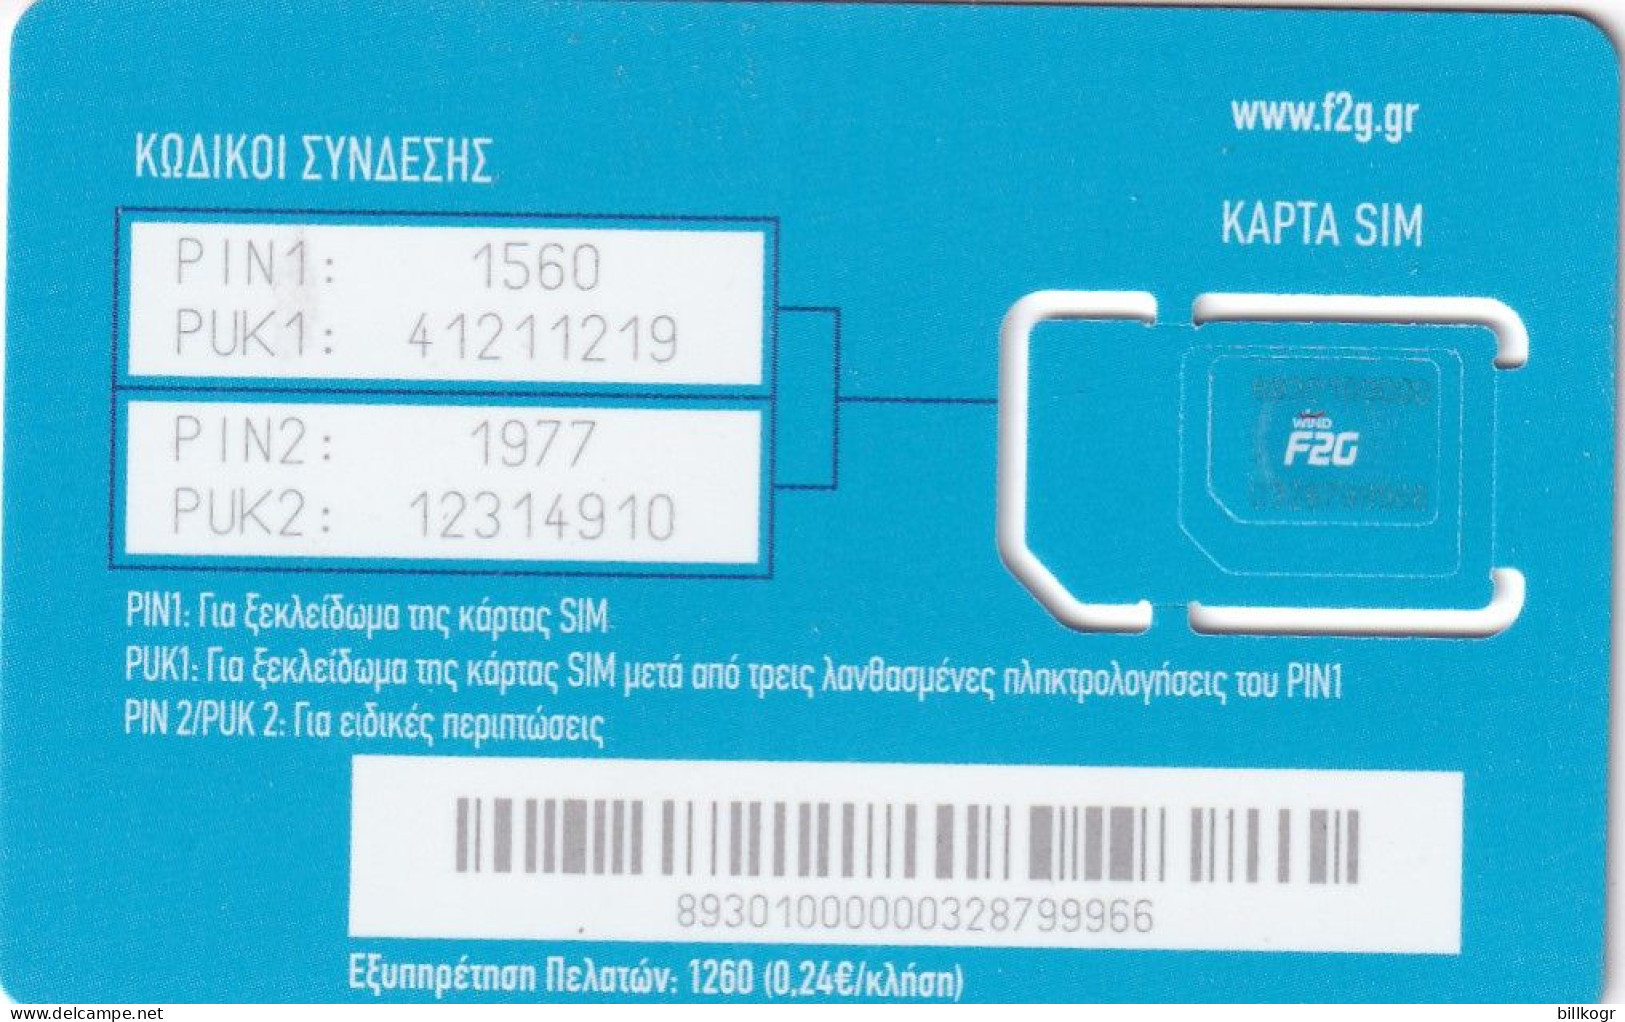 GREECE - F2G, WIND GSM, Mint - Greece